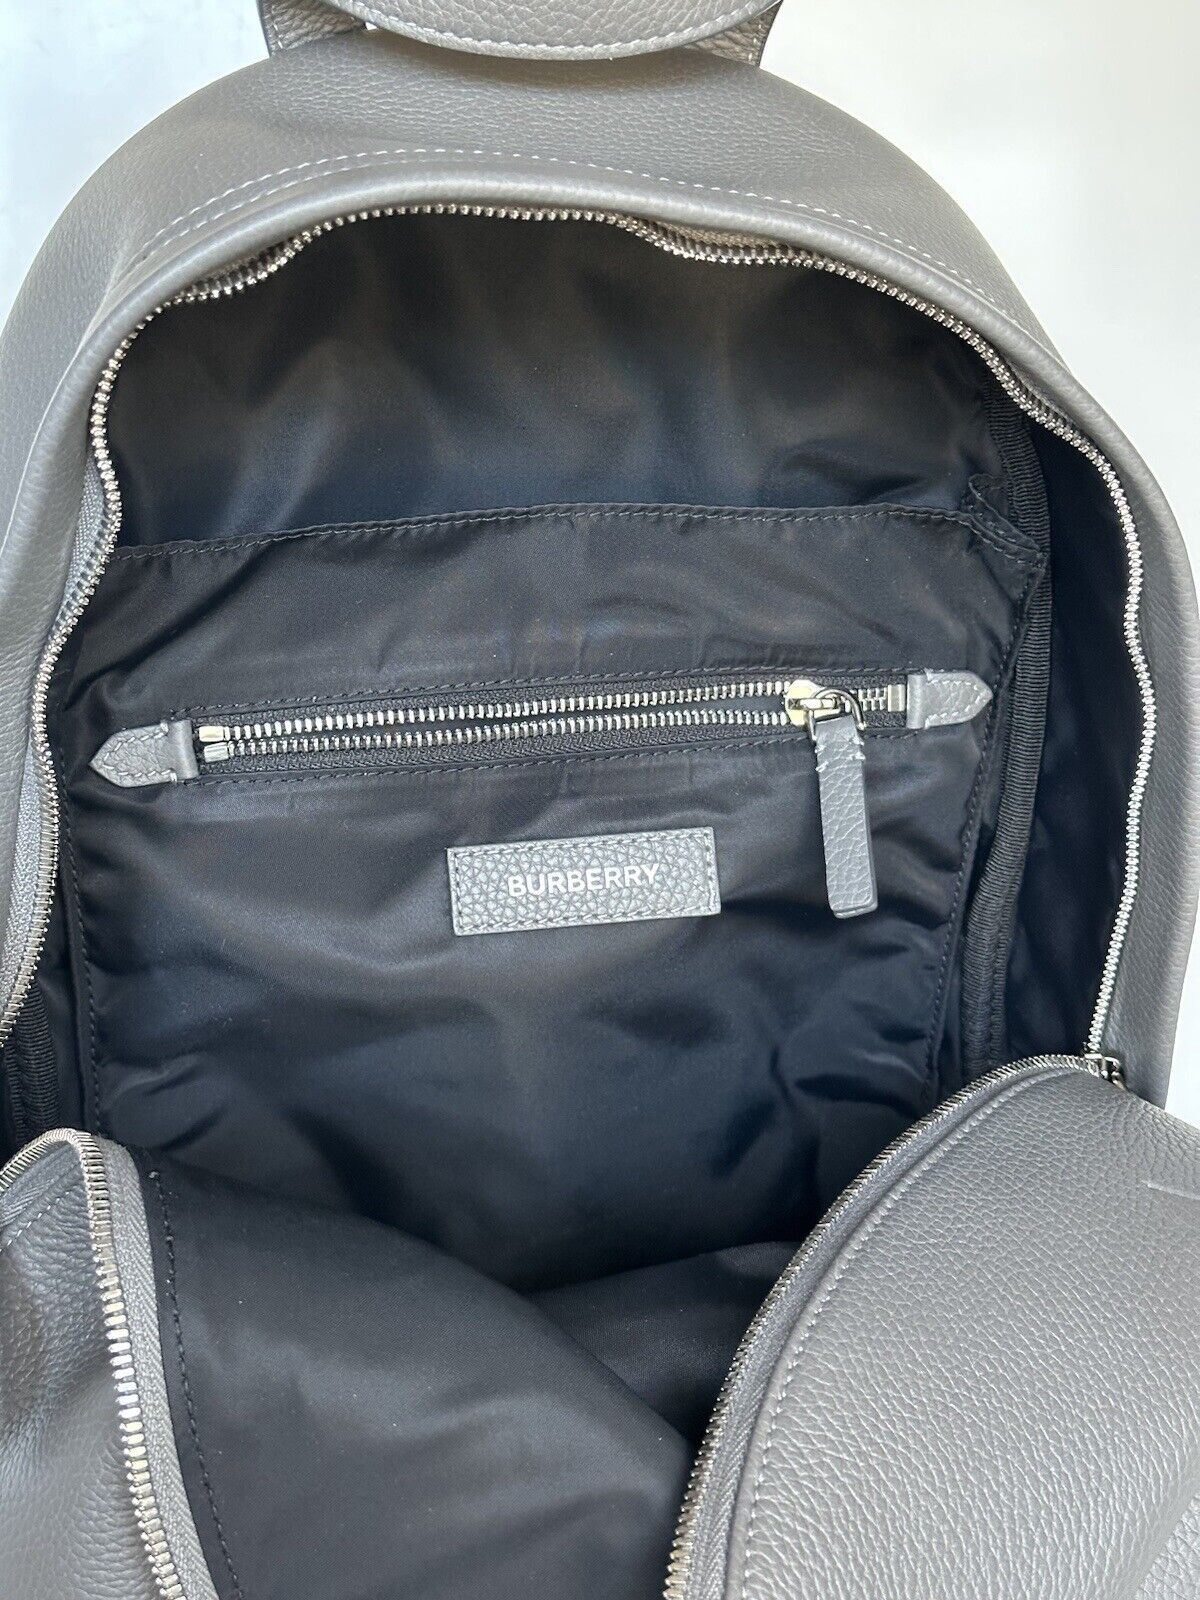 NWT $1650 Burberry Кожаный рюкзак с логотипом Abbeydale Темно-серый 80528731 